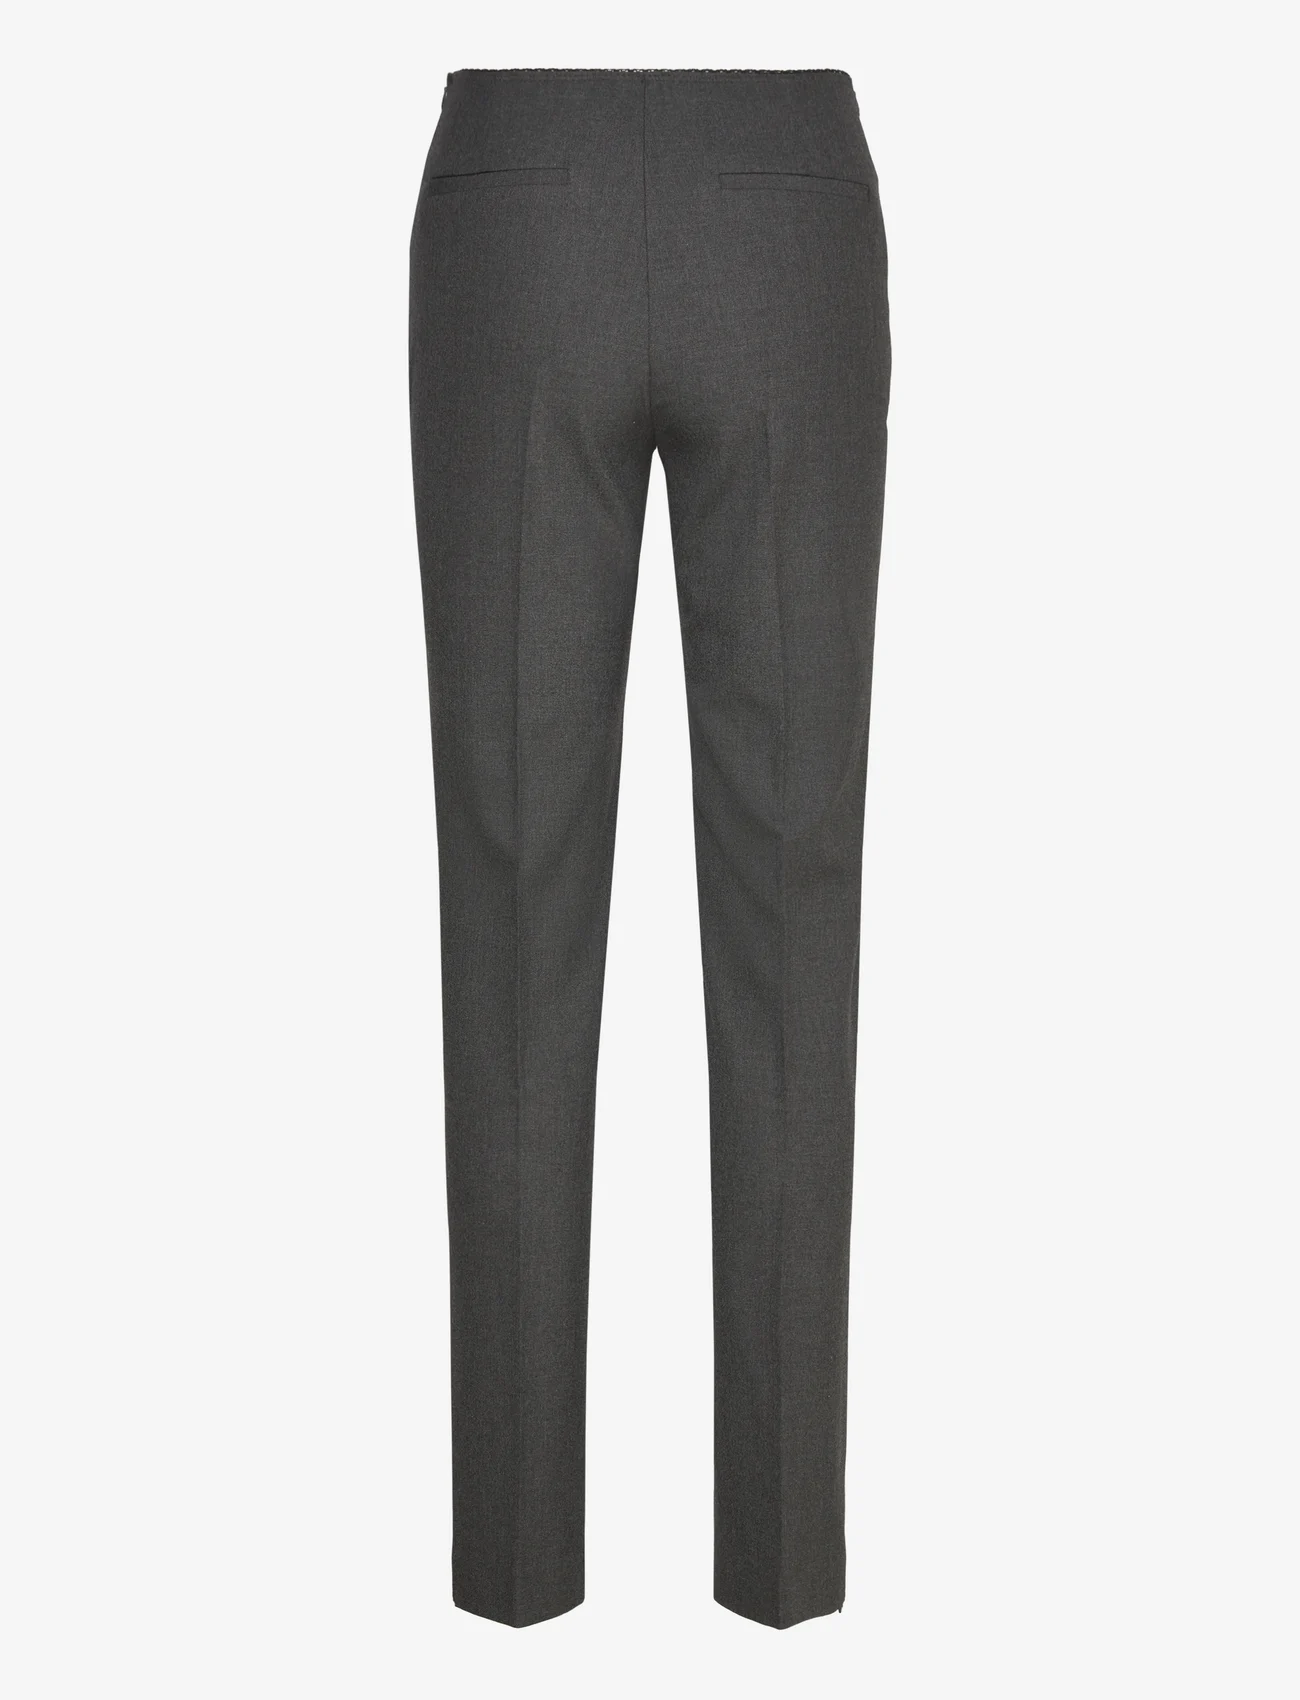 Mango - Pants bottom side zipper - habitbukser - lt pastel grey - 1